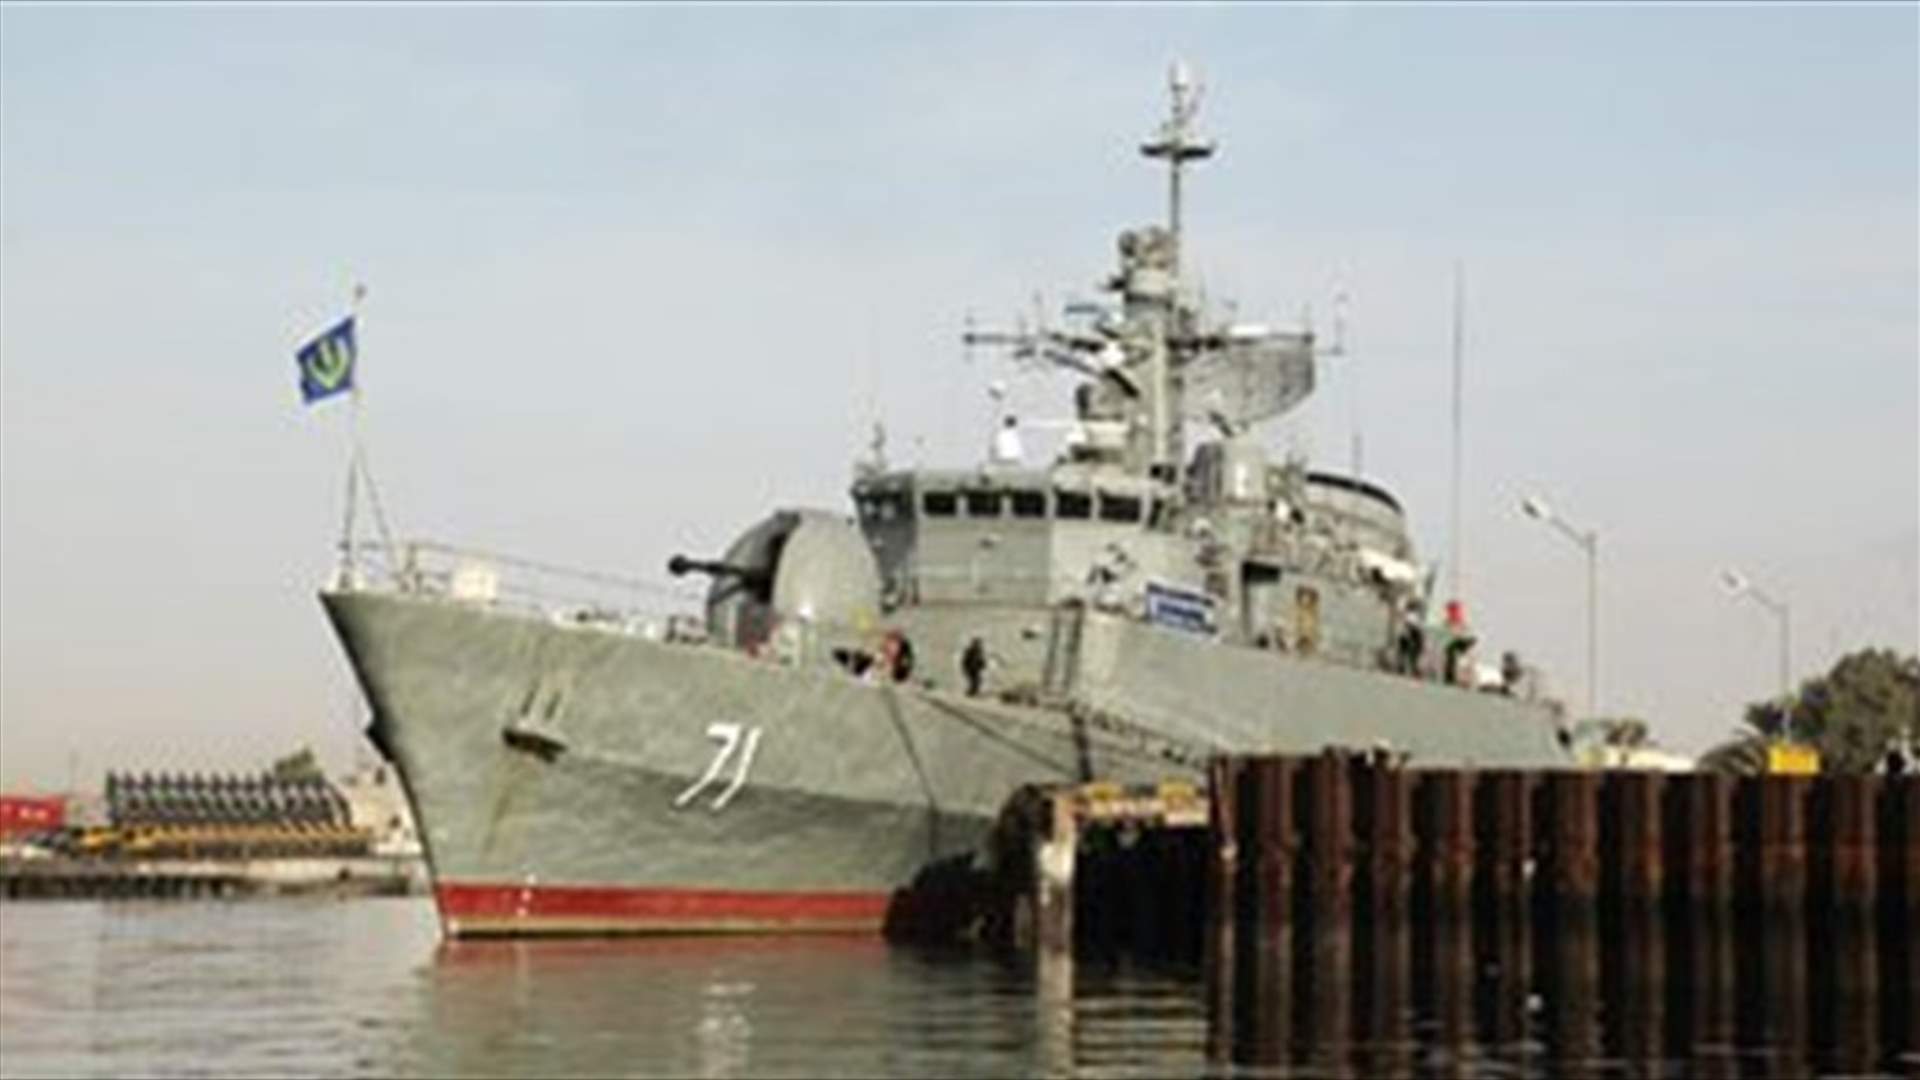 Iranian vessel sails close to U.S. Navy ship in Gulf -U.S. officials